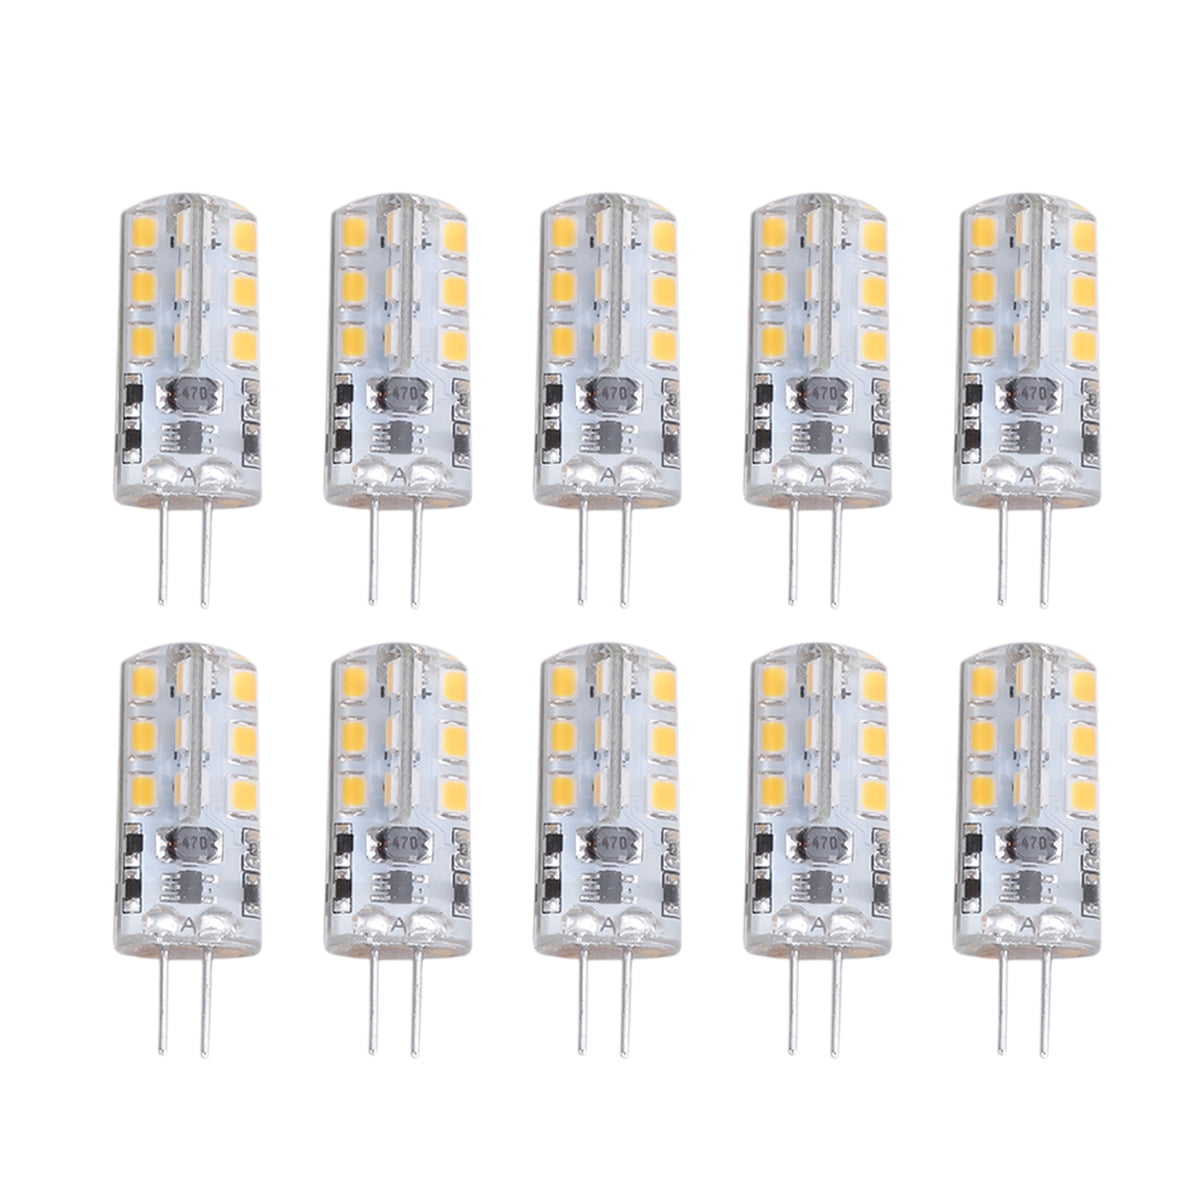 10x G4 LED 2835 SMD Bulbs Halogen Capsule Lamps Lights 12V Warm White 2W 10W 20W 